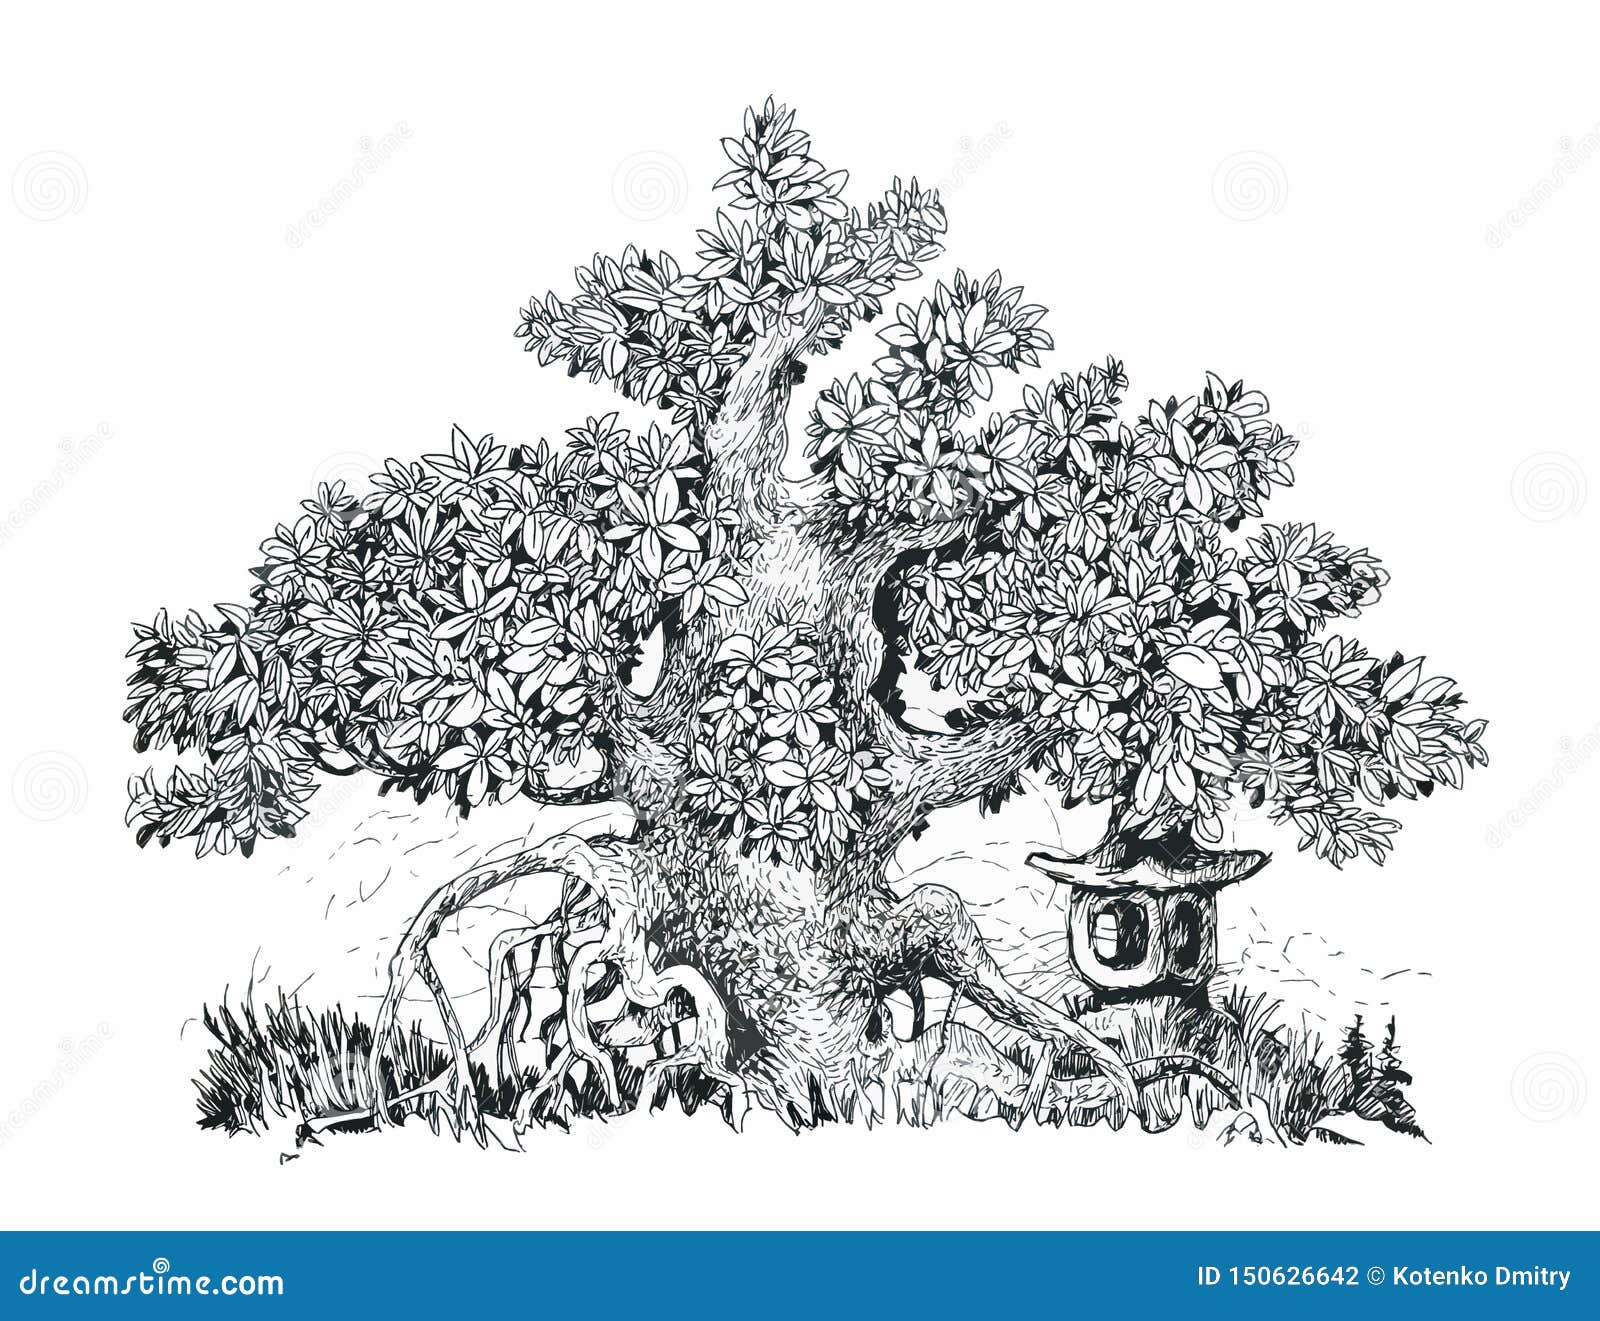 Japanese Bonsai And Stone Lantern Ink Drawing Stock Illustration Illustration Of Japanese Trees 150626642